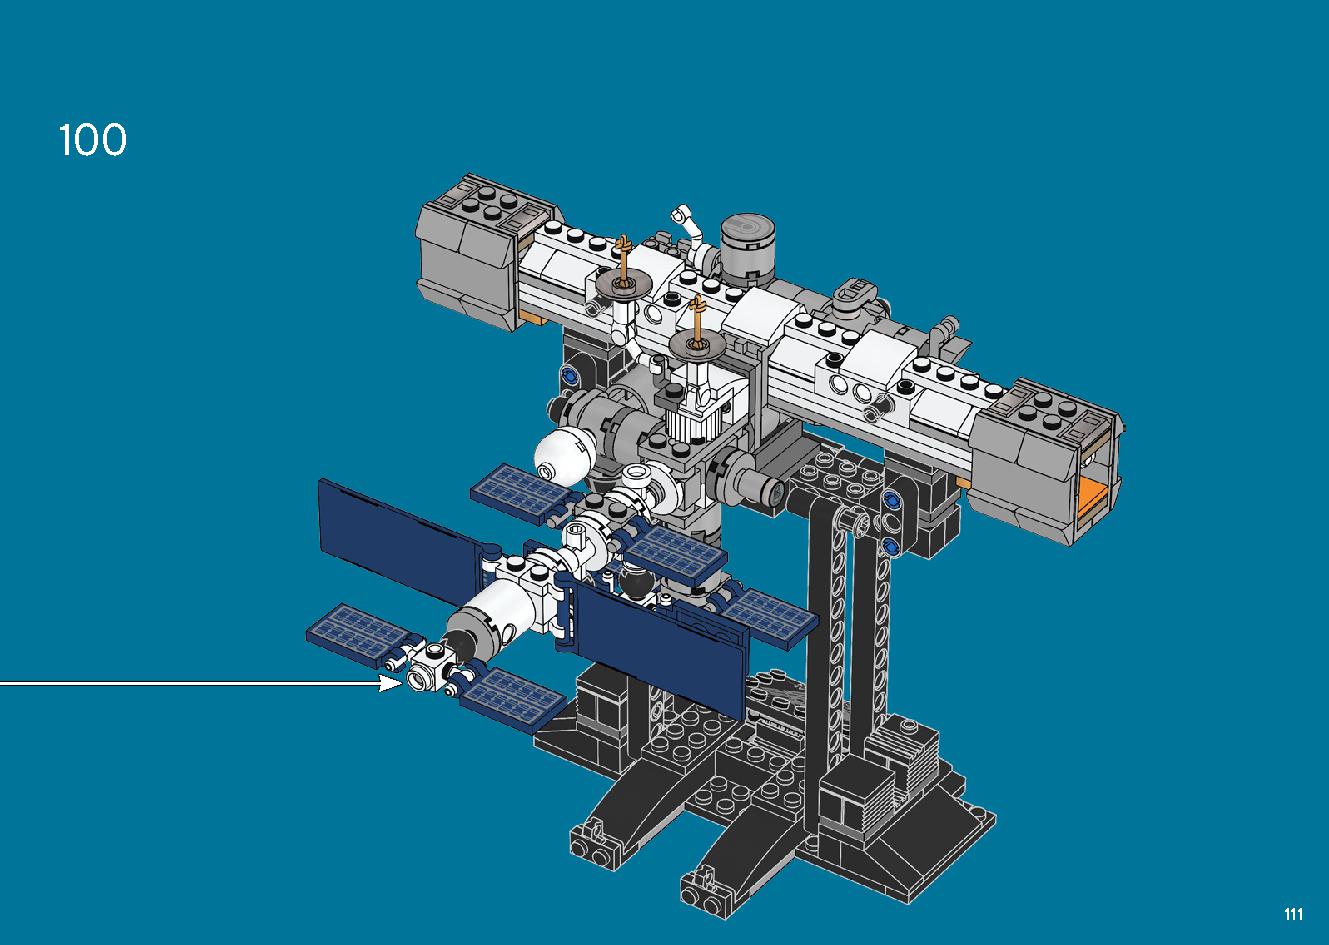 International Space Station 21321 レゴの商品情報 レゴの説明書・組立方法 111 page